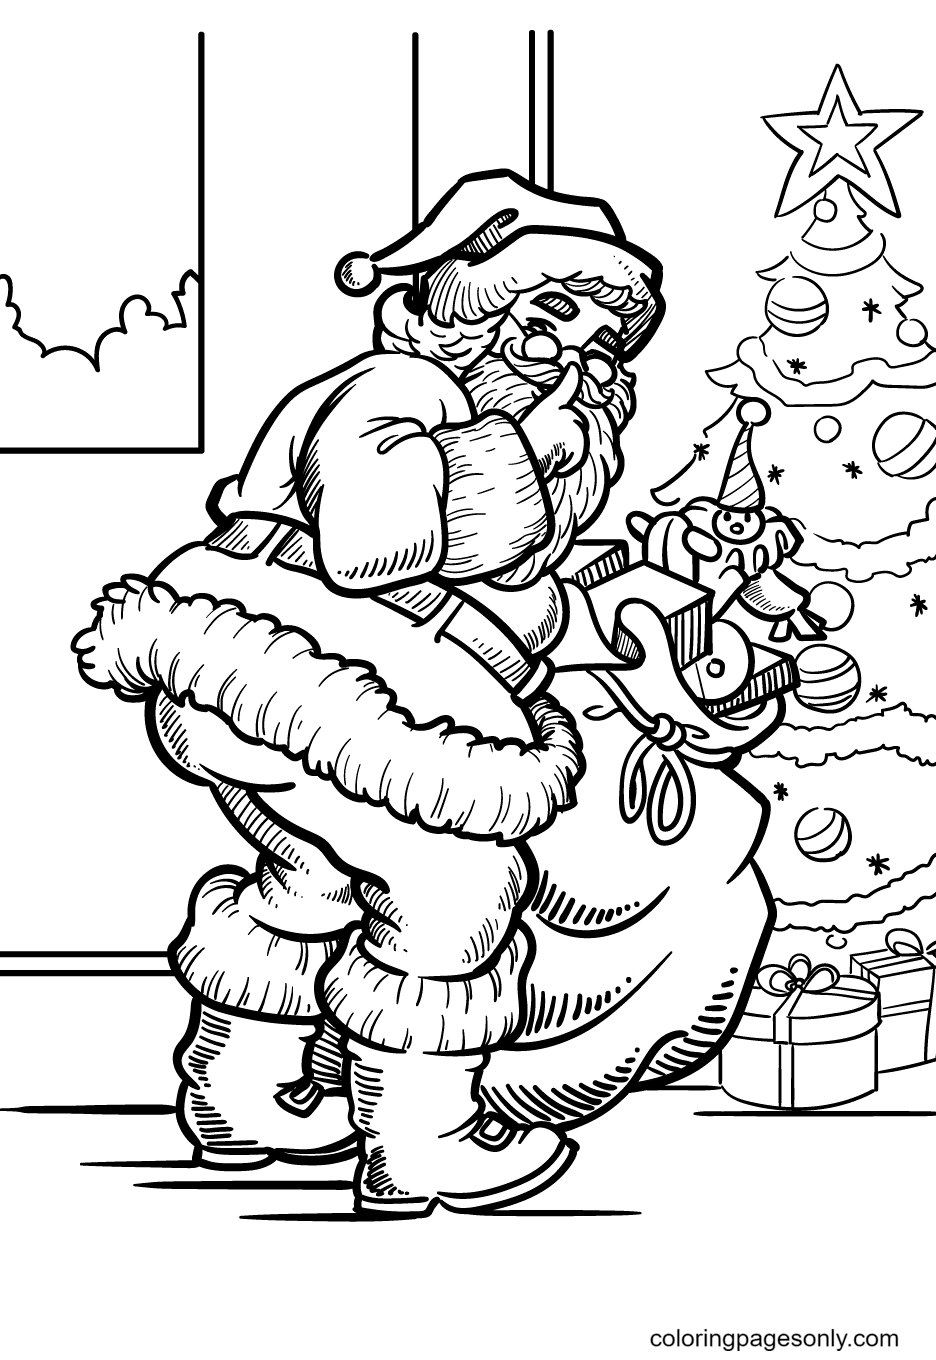 Раскраска Санта-Клаус тайком доставляет подарки